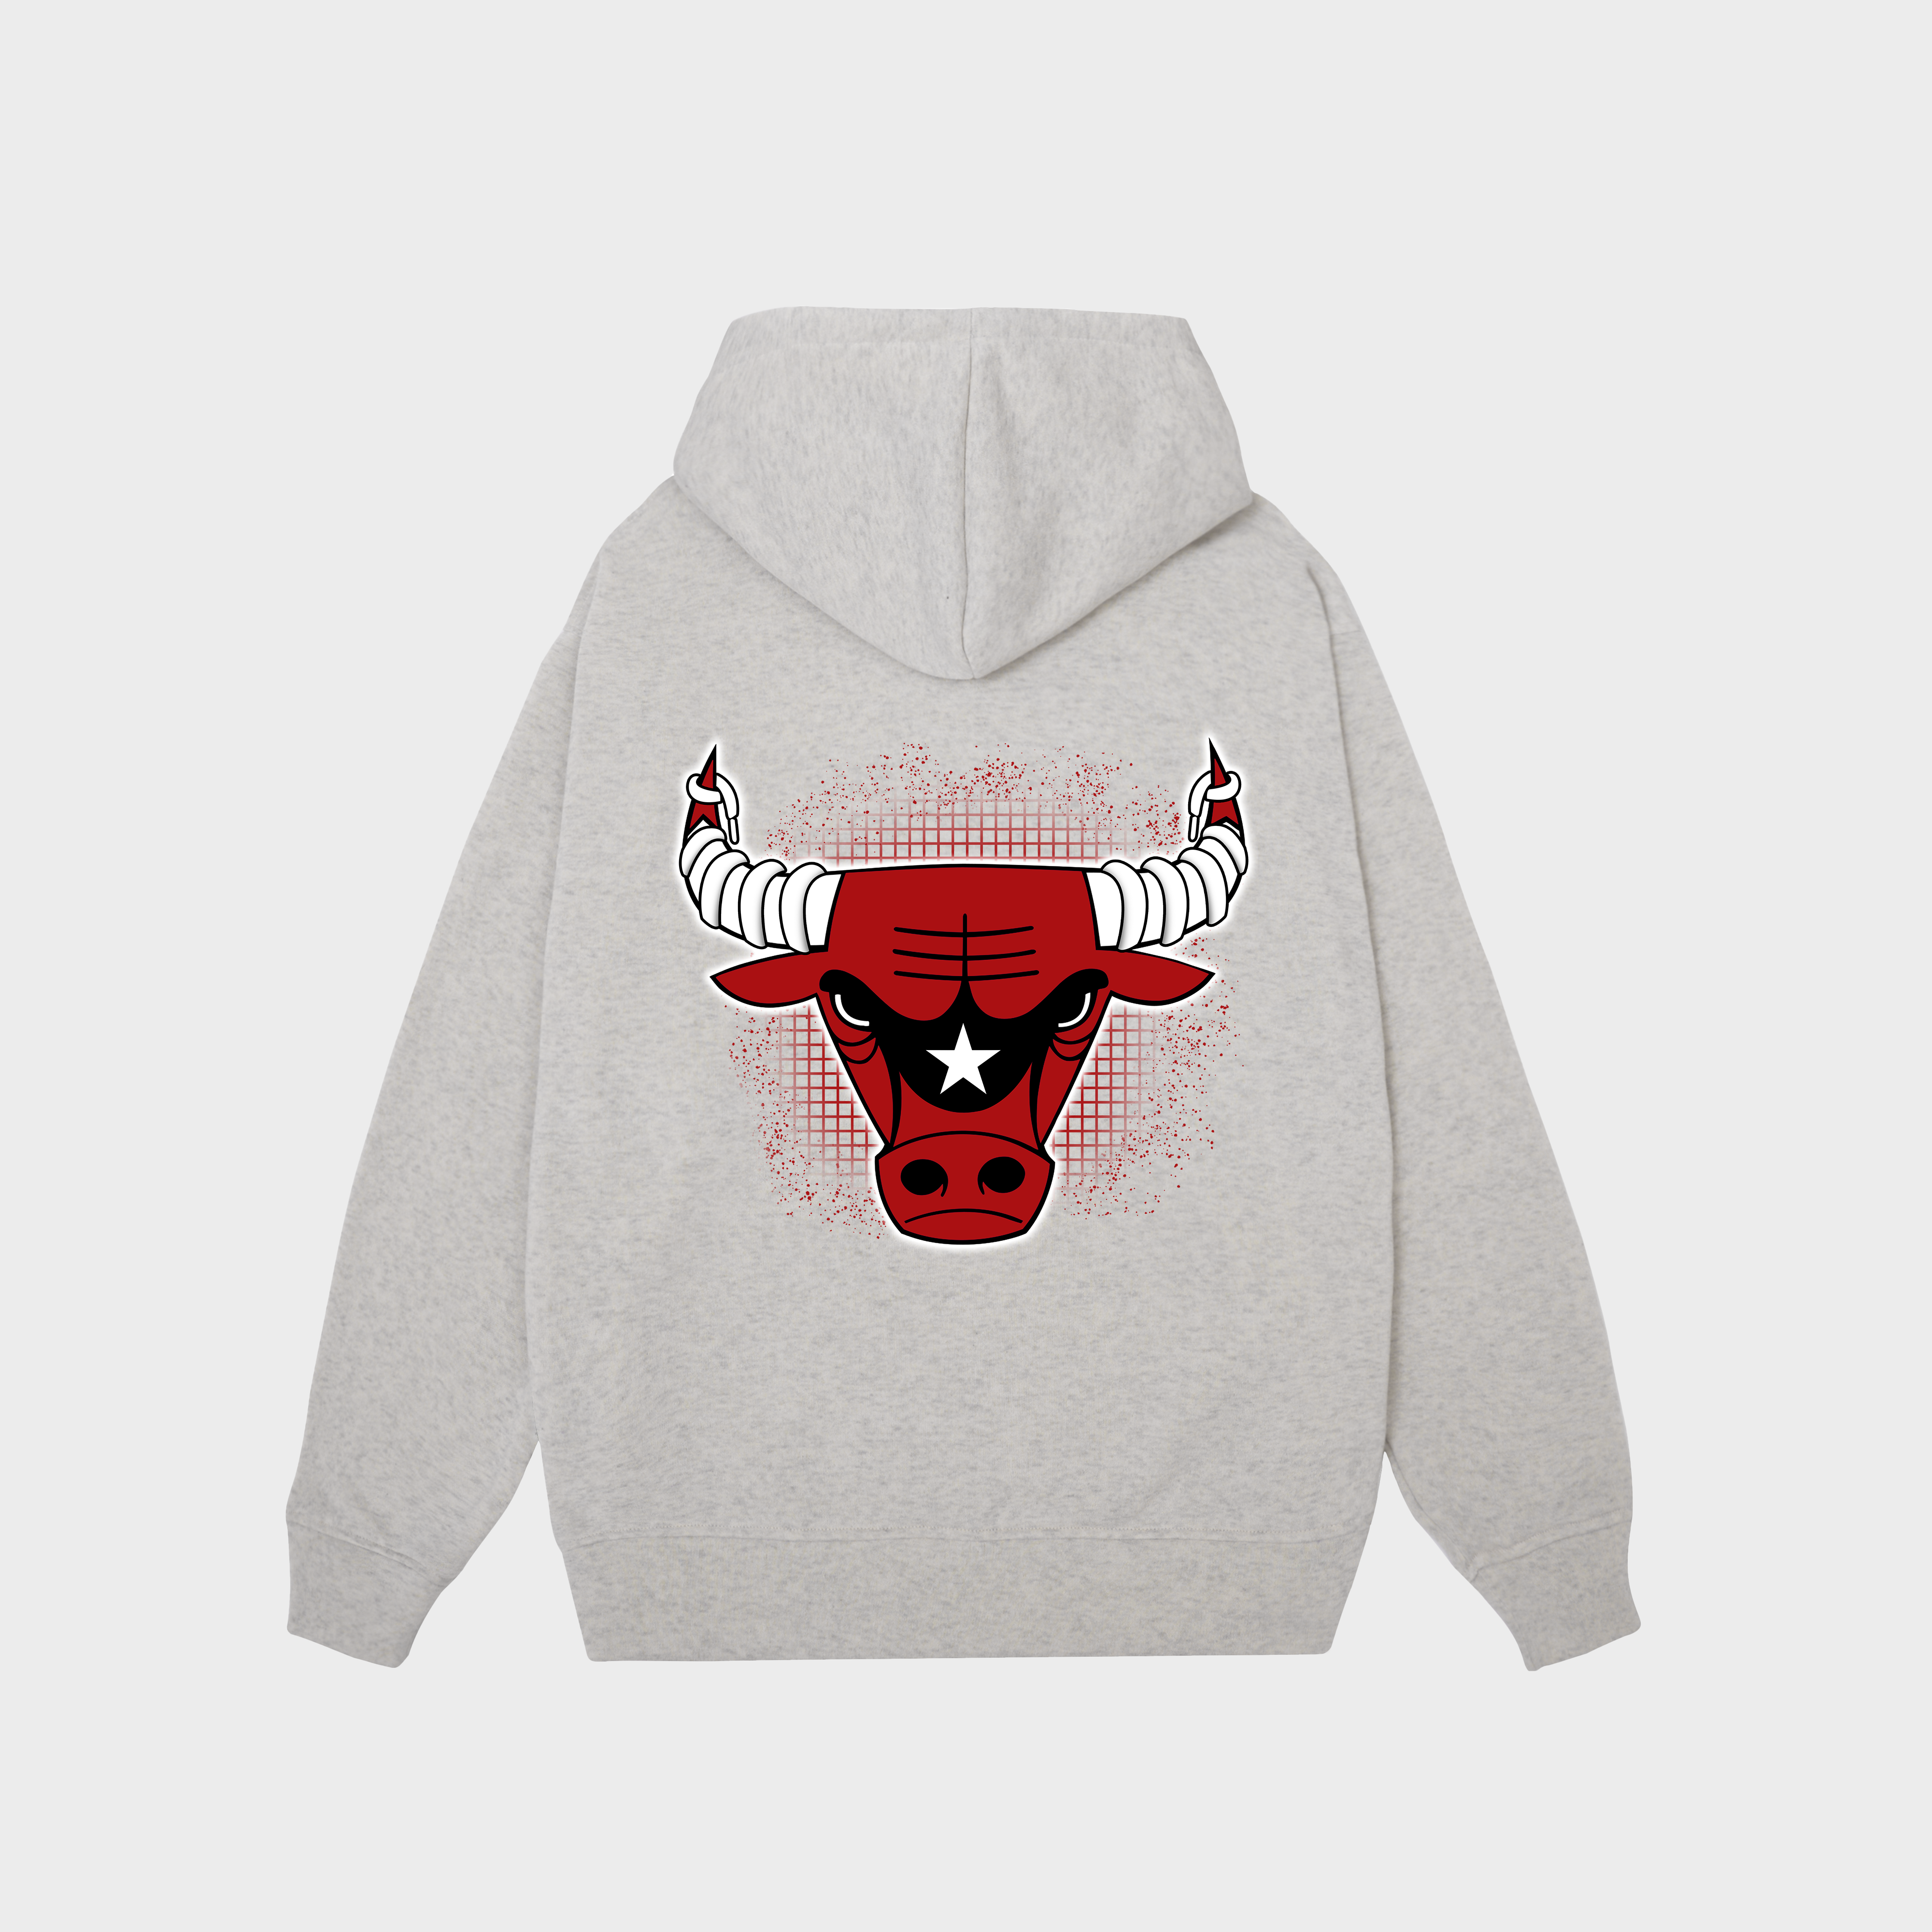 NBA Chicago Bulls Hoodie